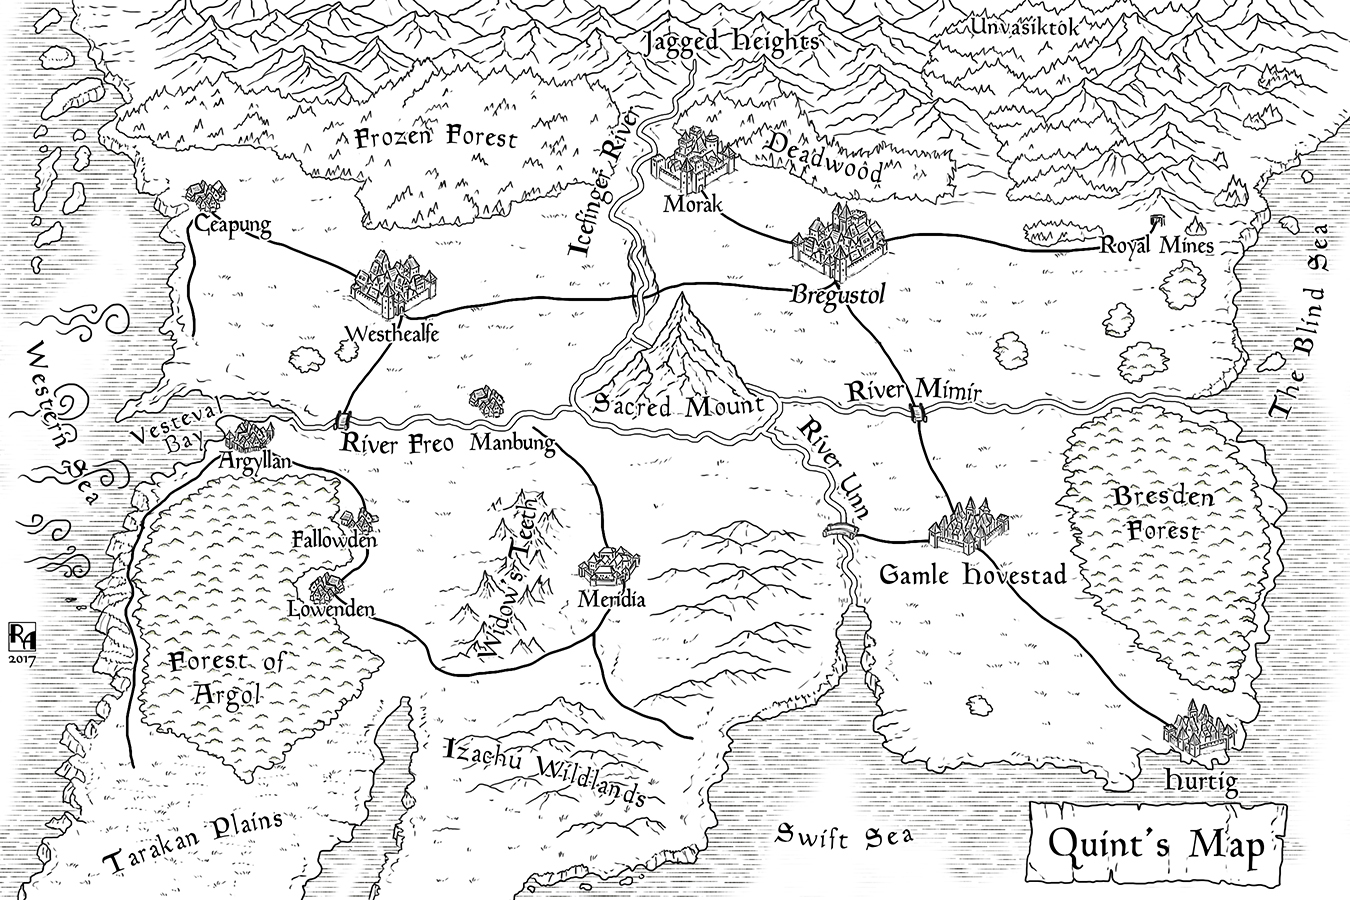 Quint's Map by Sapiento on DeviantArt